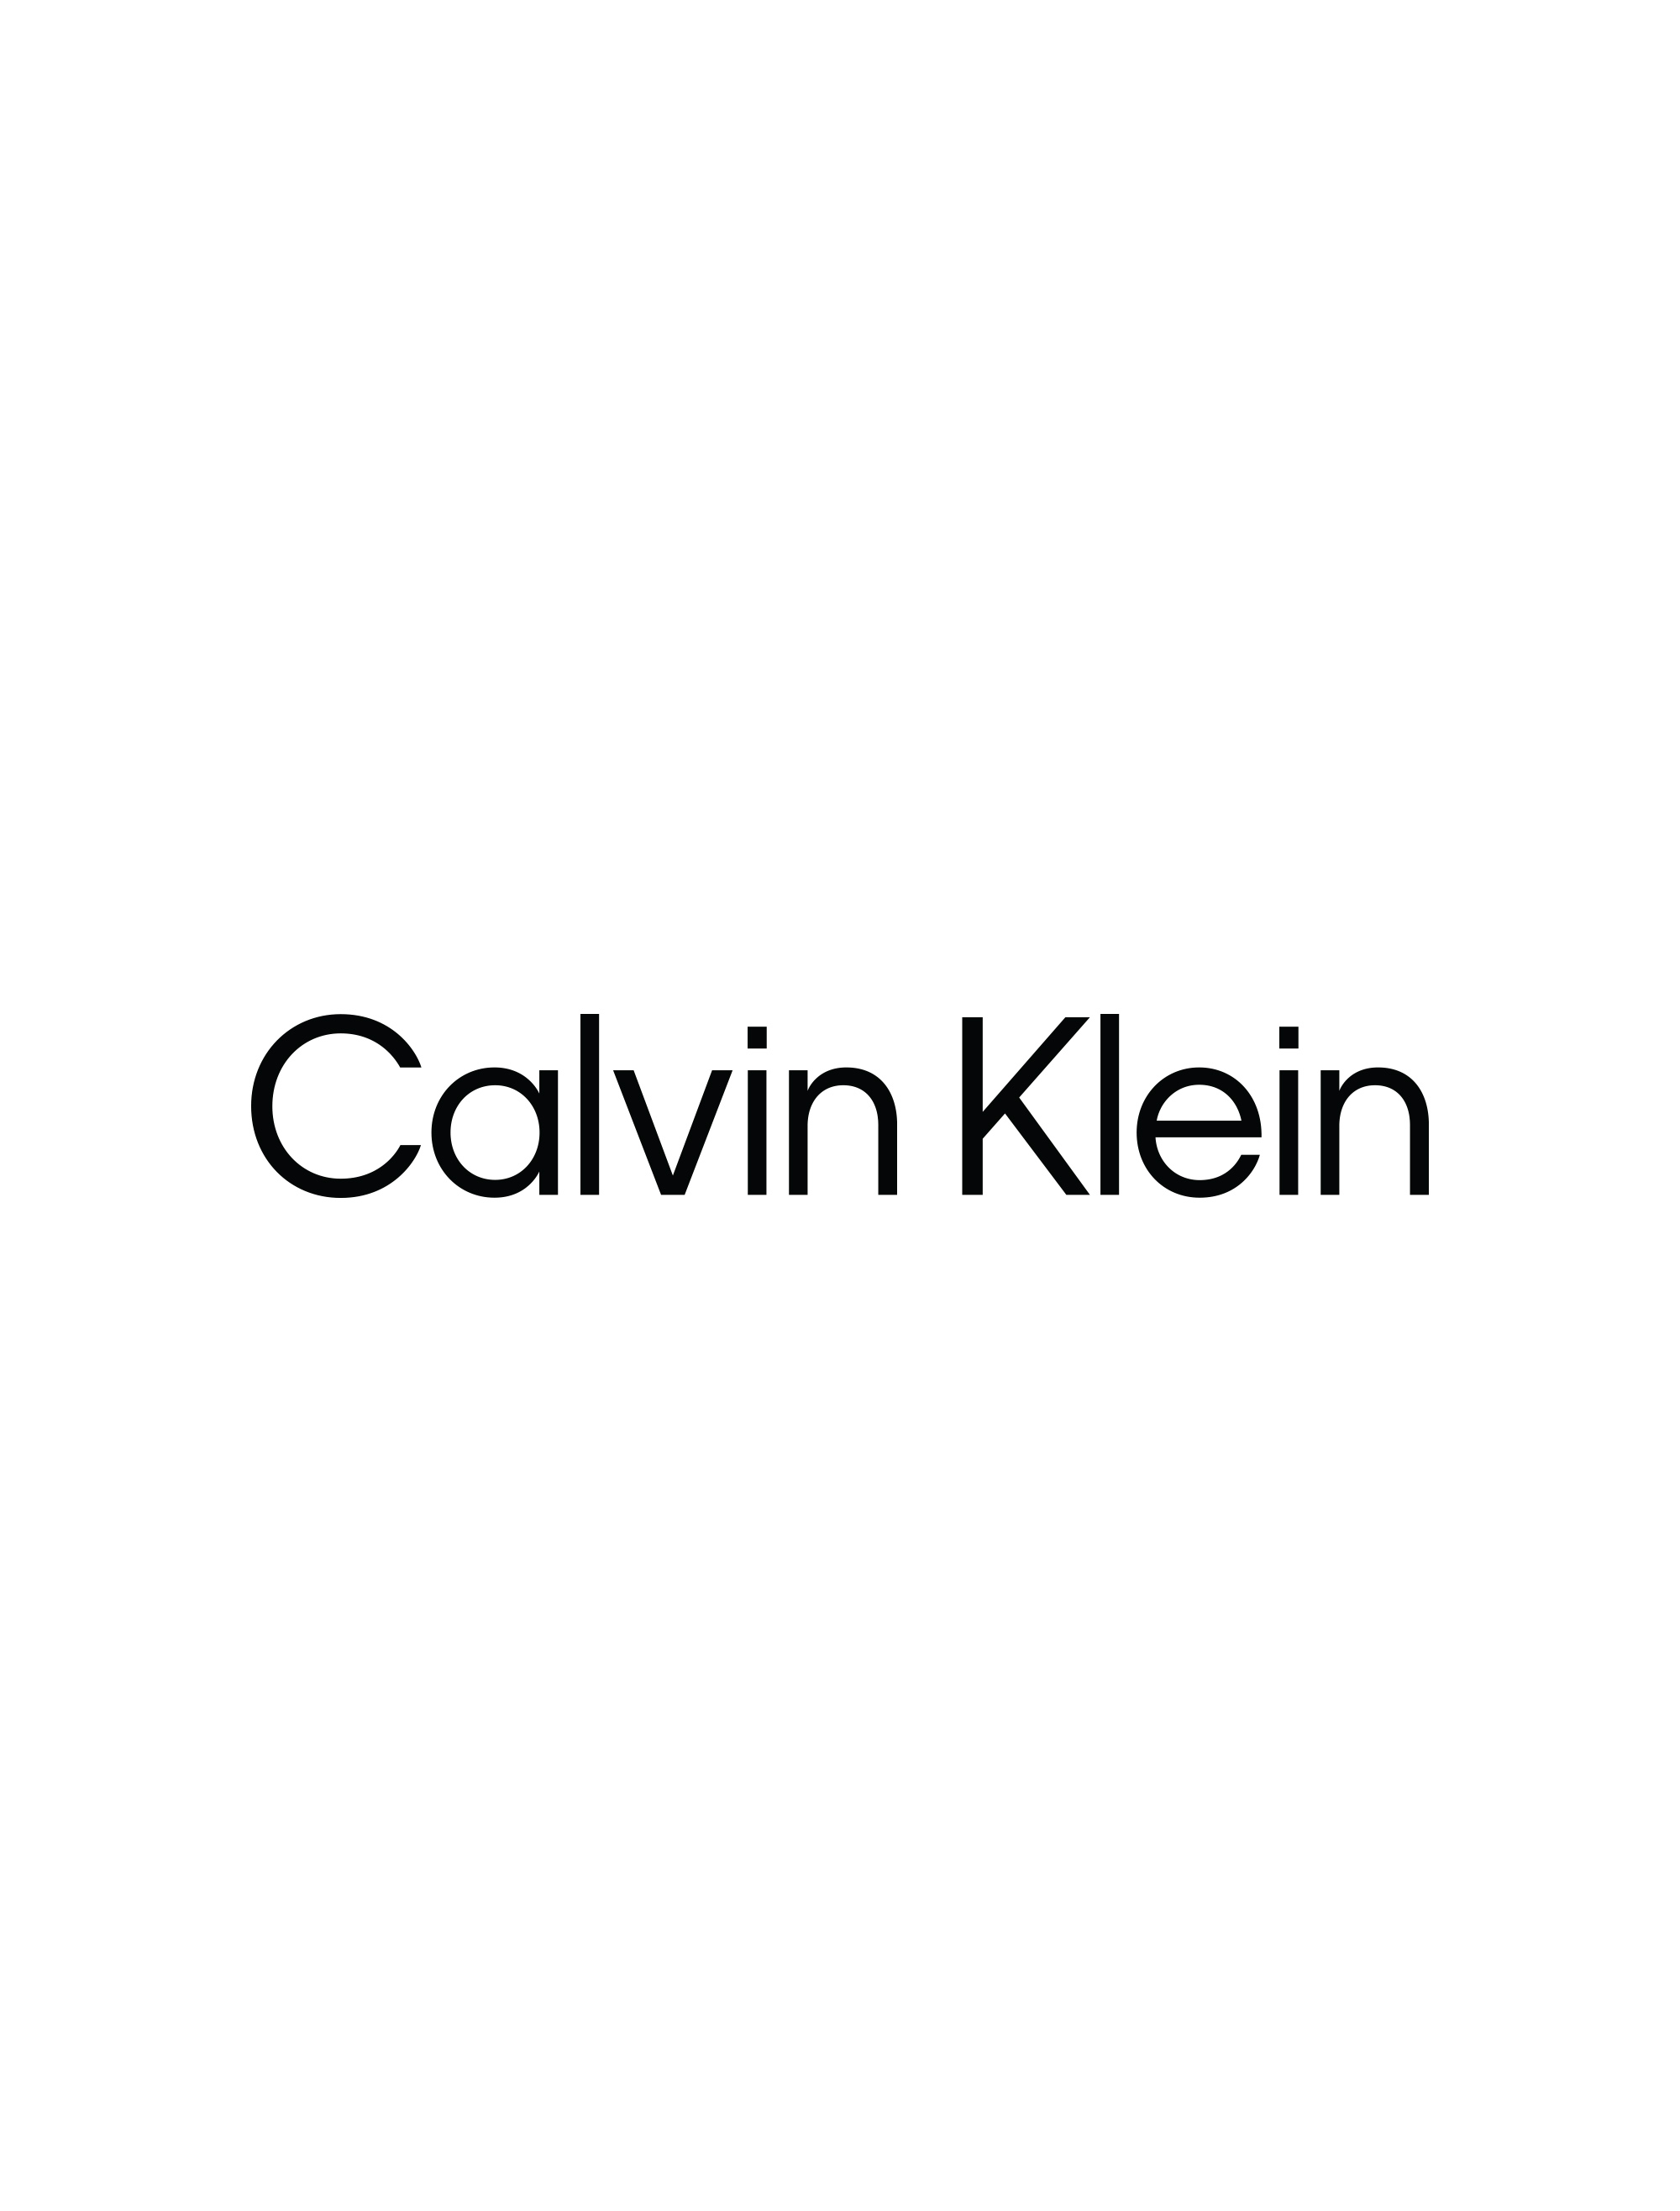 Calvin Klein Hello Kitty Valentines Lingerie & Boxers Set, Women's Fashion,  New Undergarments & Loungewear on Carousell